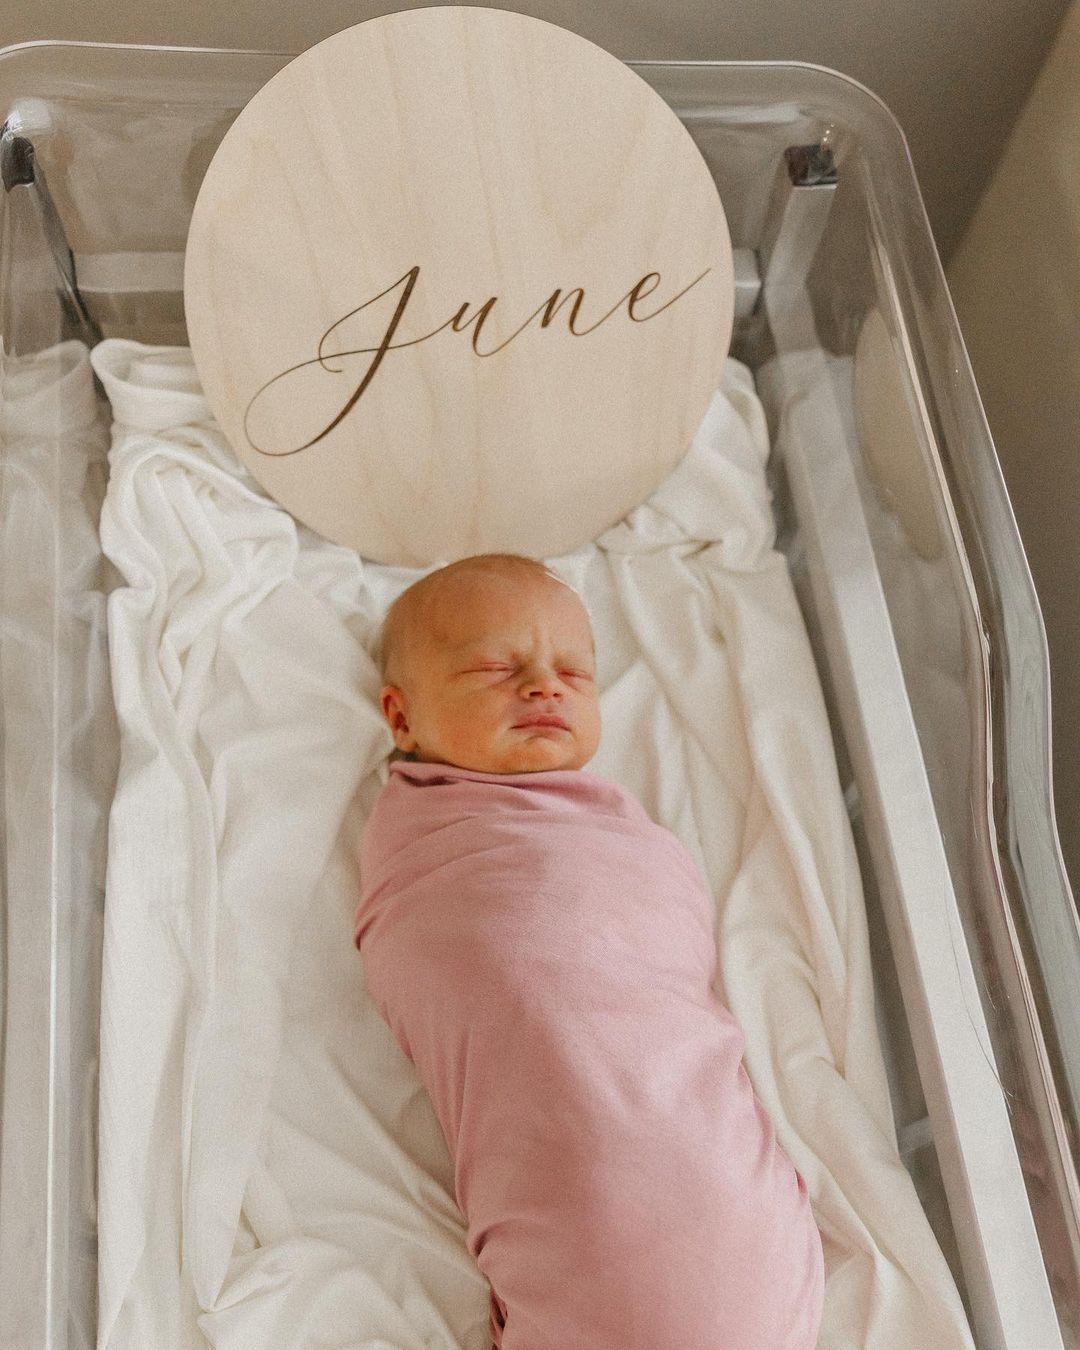 Lindsay Arnold Reveals Her Newborn's Name, Shares Photos